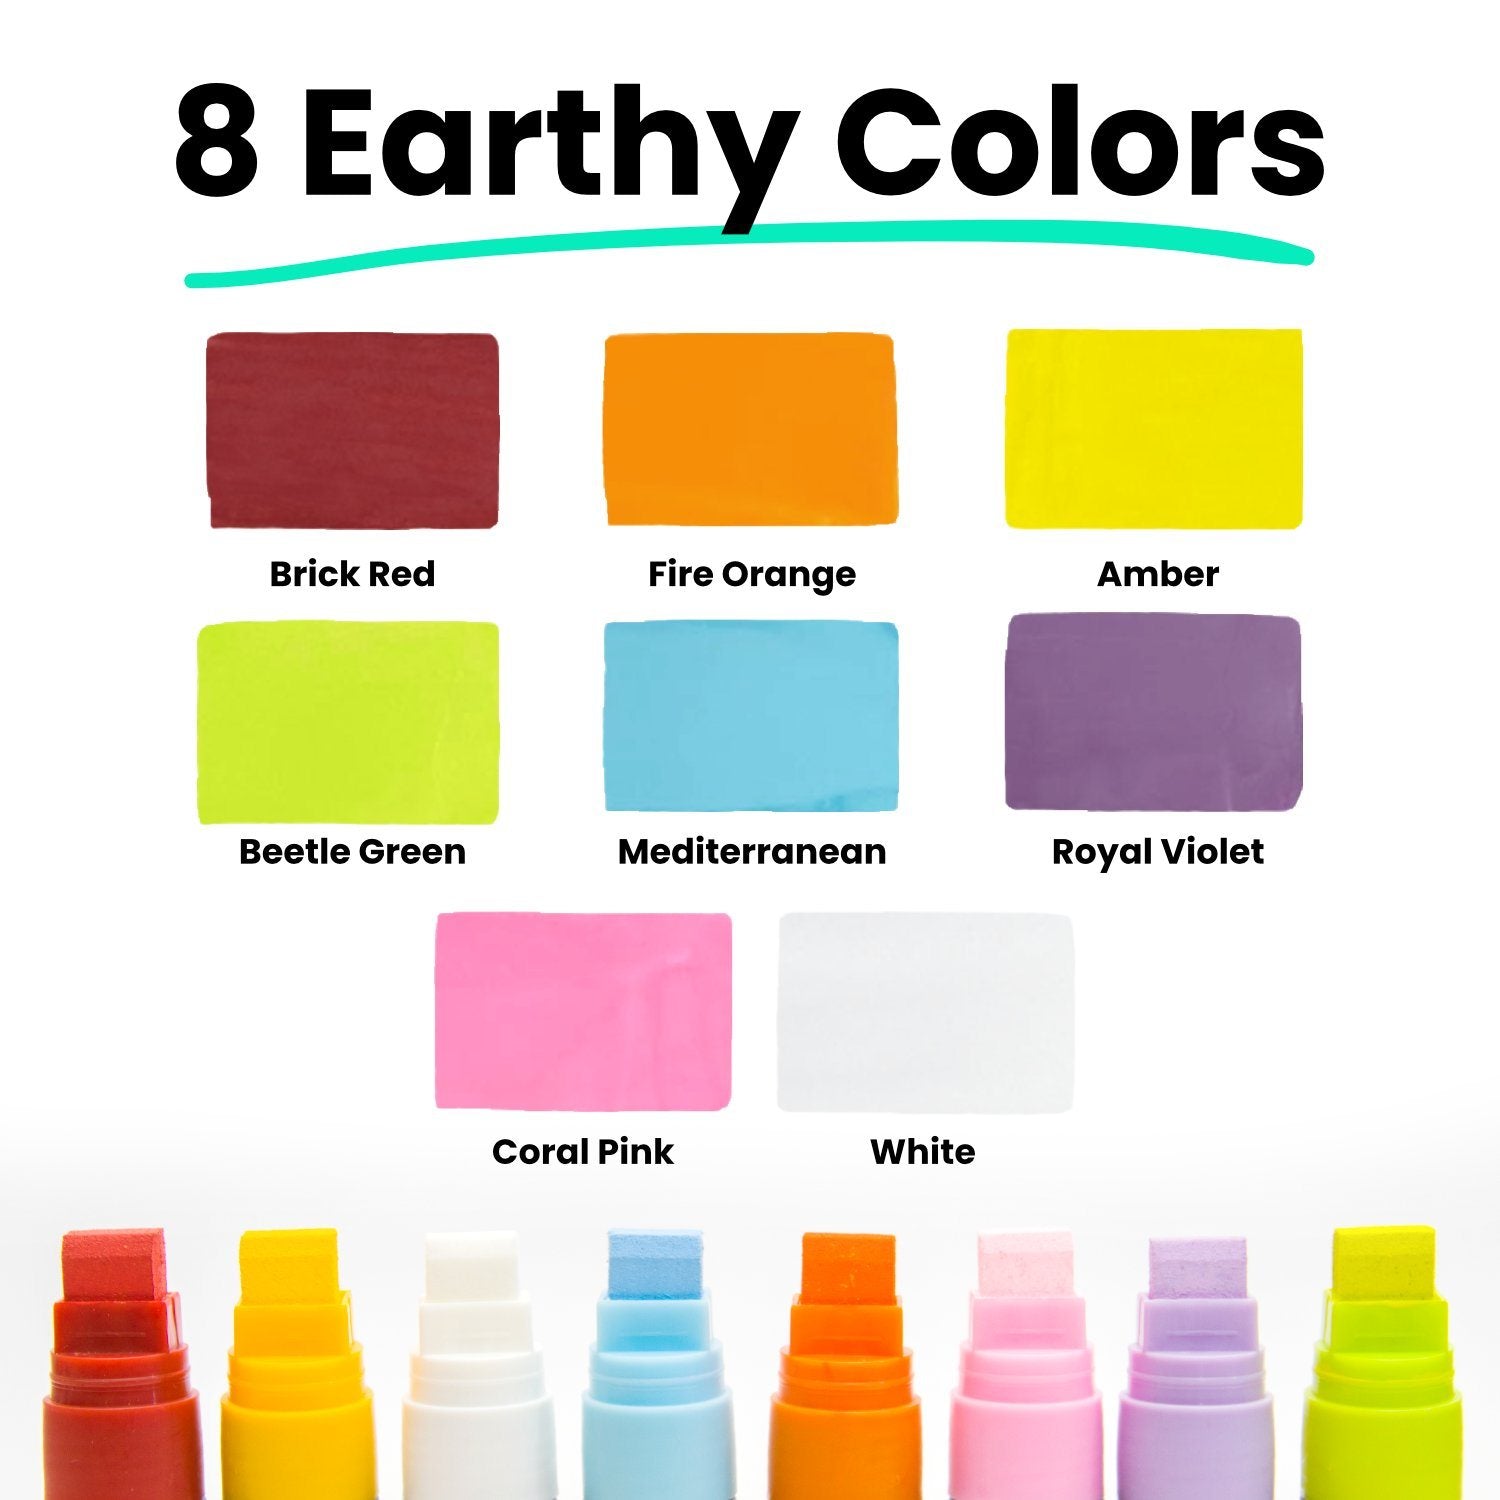 Starter Chalk Markers Bundle - 5 White + 10 Bold Colors